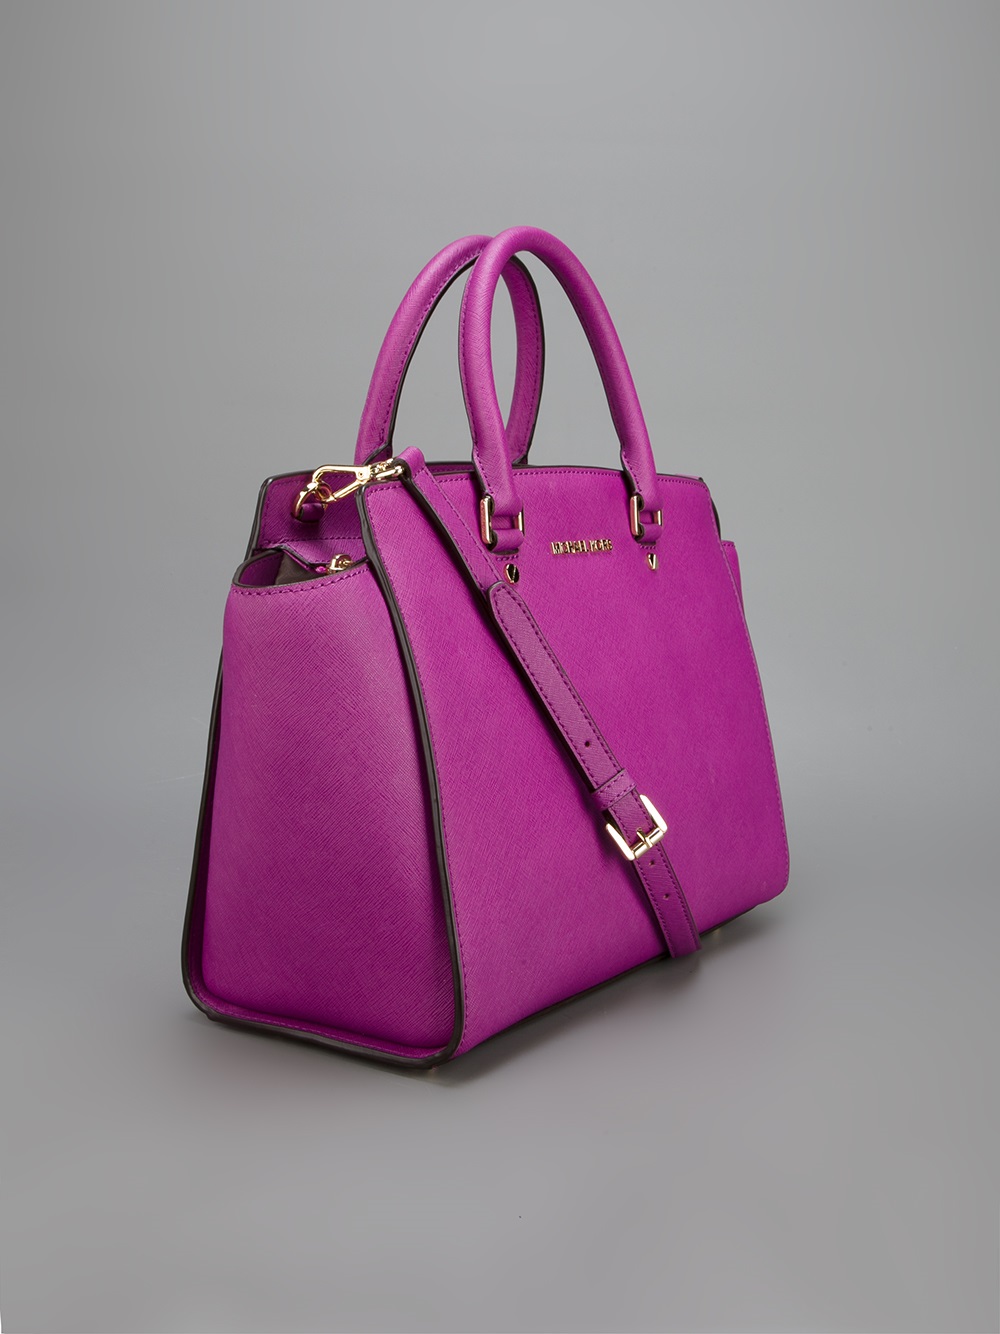 MICHAEL Michael Kors Selma Handbag in Pink & Purple (Purple) - Lyst